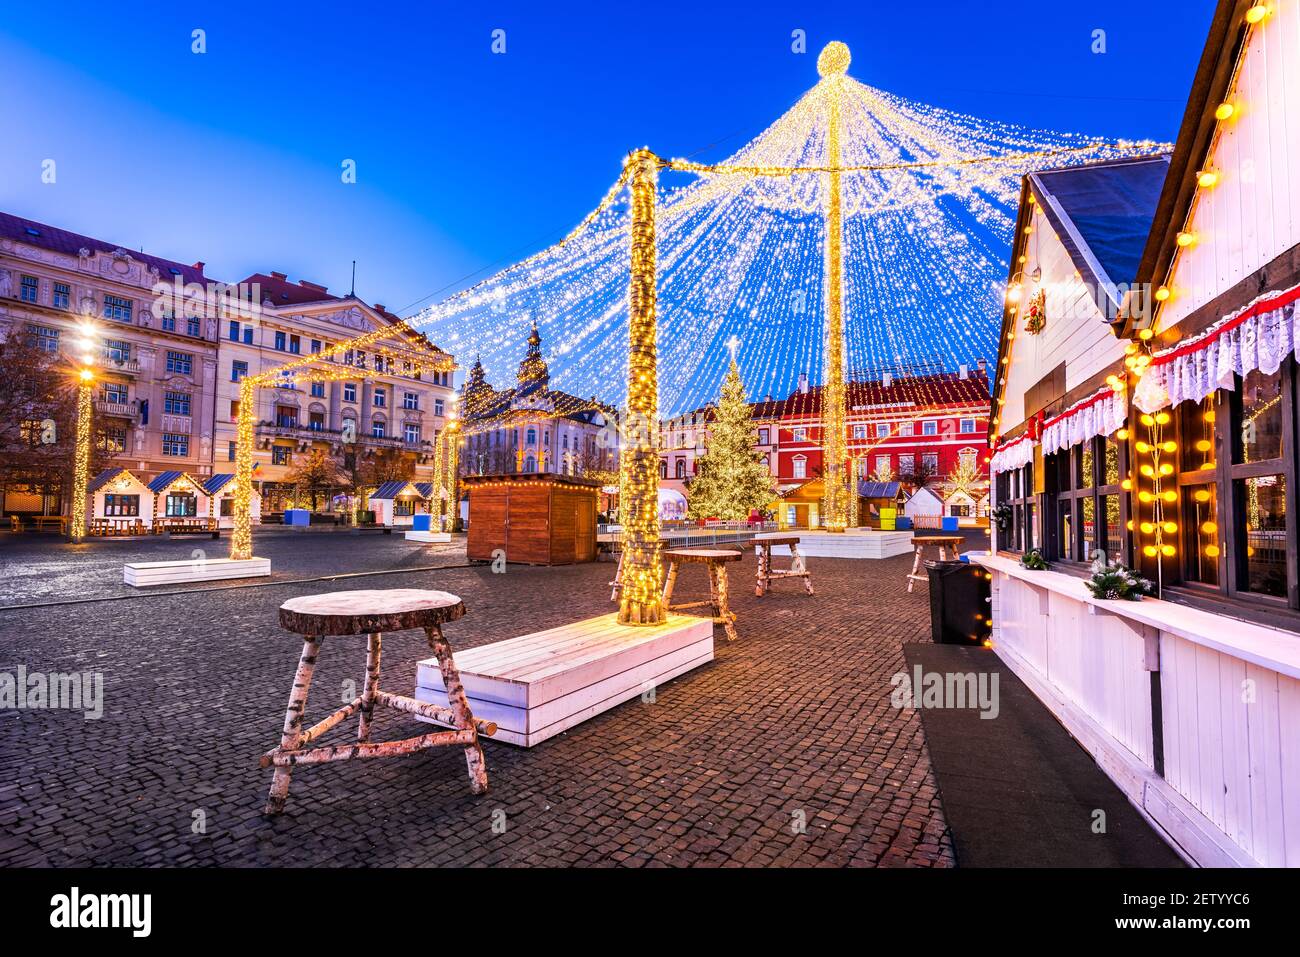 Cluj Napoca, Romania - Night scene with Christmas Market in Transylvania, Eastern Europe winter holiday scene. Stock Photo